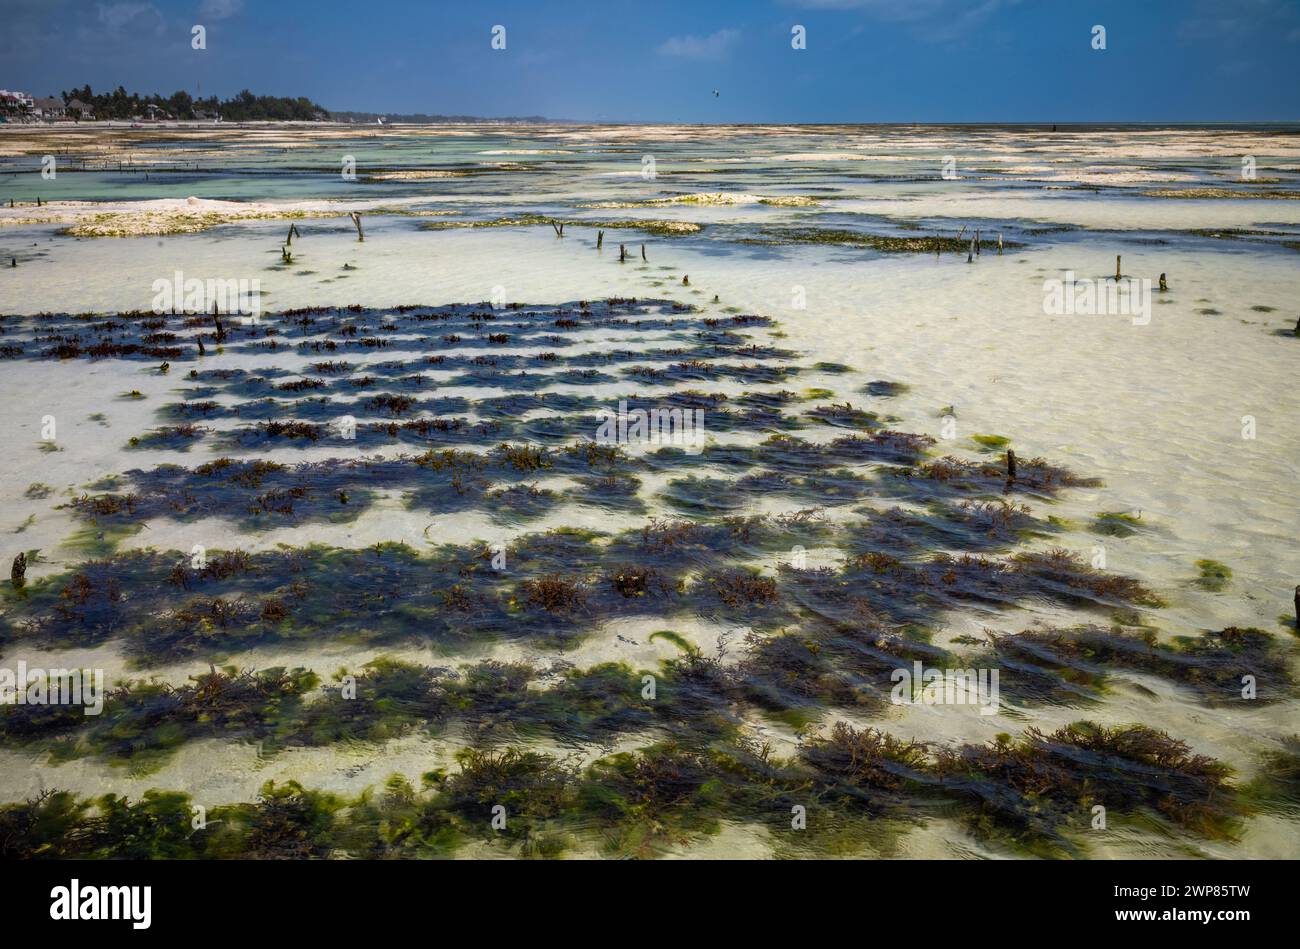 Seaweed (Eucheuma denticulatum) covered in the algae  Enteromorpha spp. growing in Jambiani, Zanzibar, Tanzania. Stock Photo